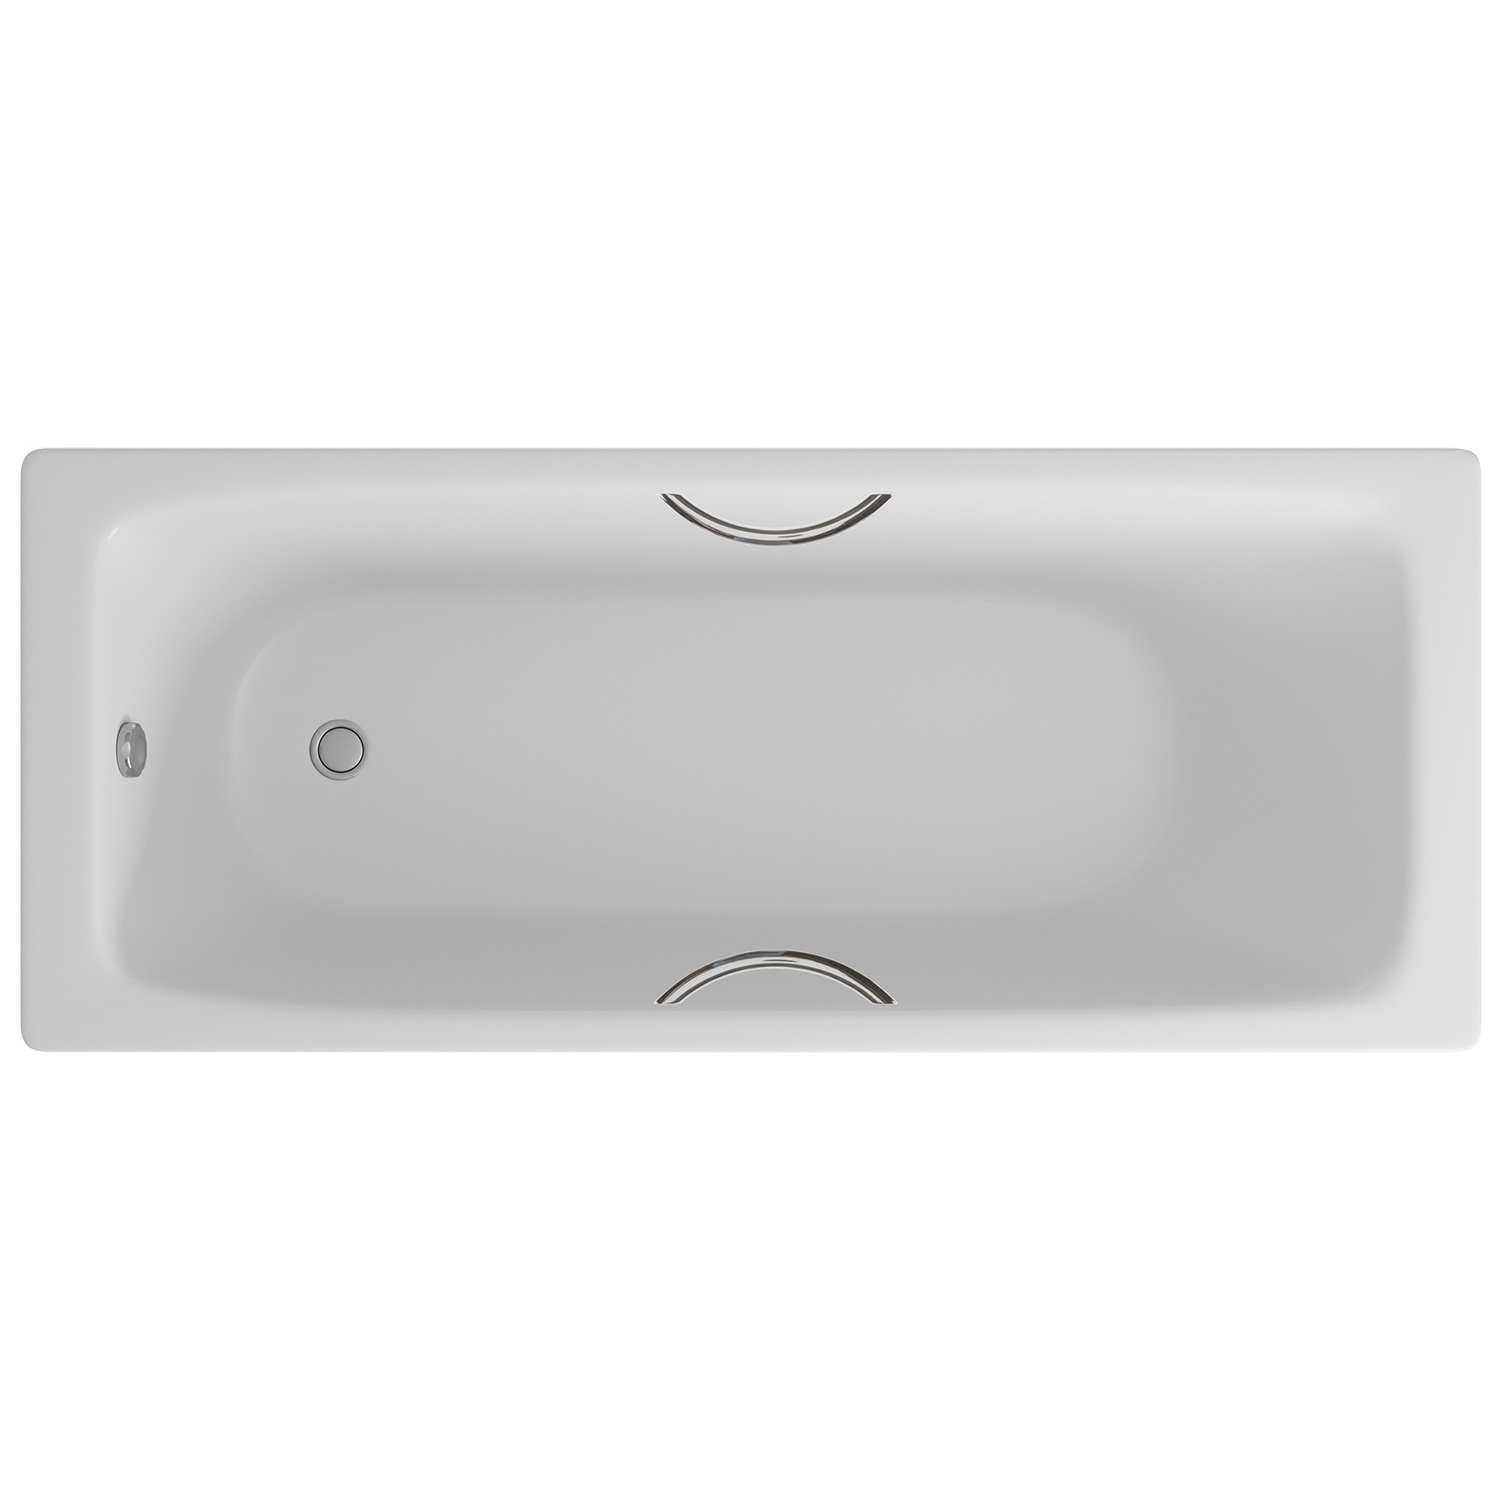 Ванна чугунная Delice Parallel DLR220505R 170х70 (белый), встраиваемая с ручками